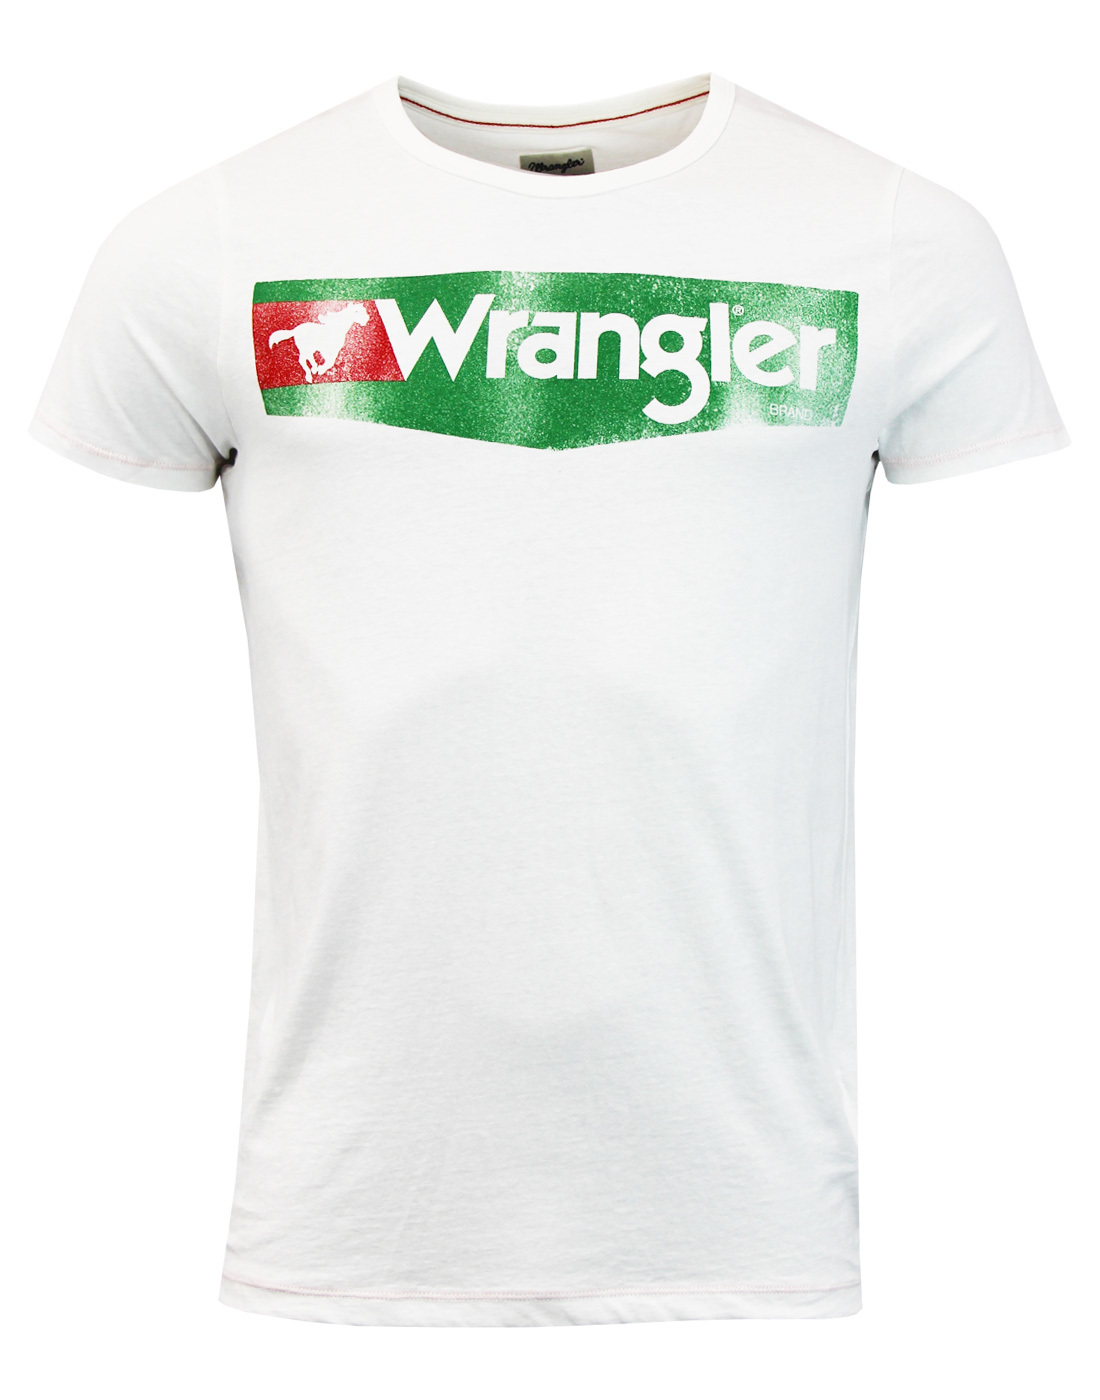 WRANGLER Retro 70s Wash Logo T-Shirt VINTAGE WHITE